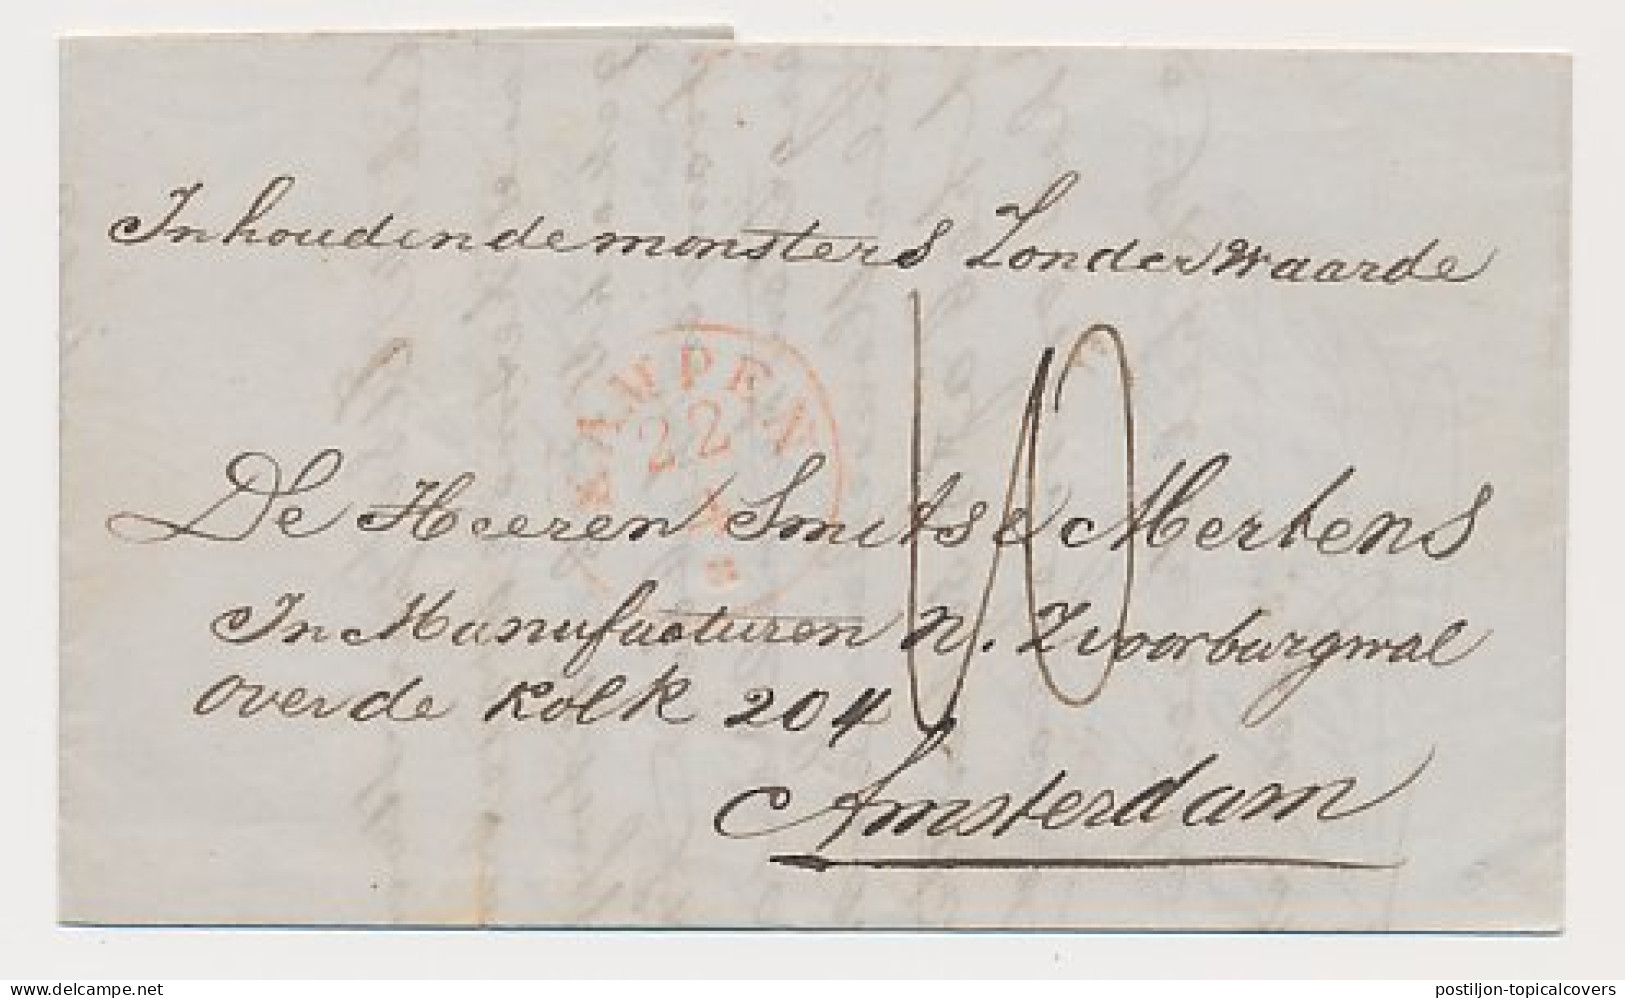 Kampen - Amsterdam 1859 - Monster Zonder Waarde - ...-1852 Vorläufer